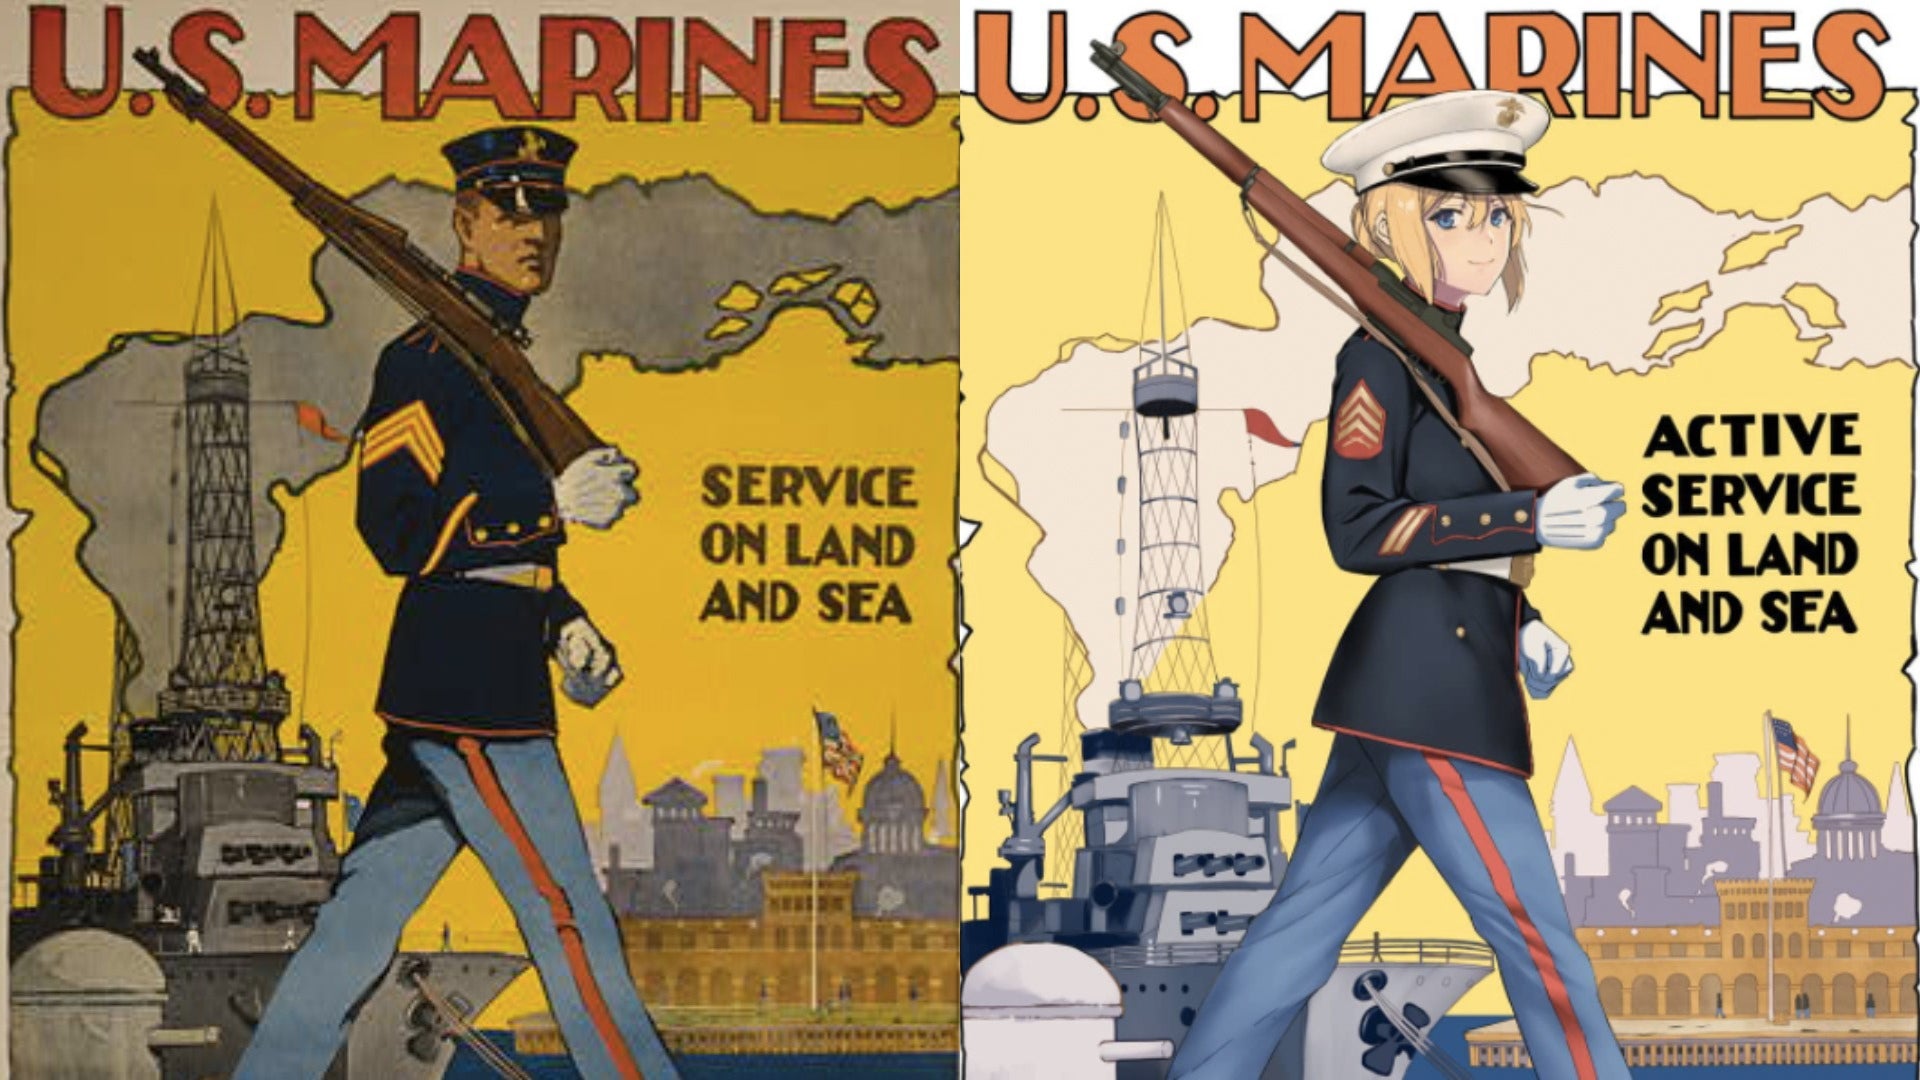 Anime style war propaganda poster - Images.AI Diffusion